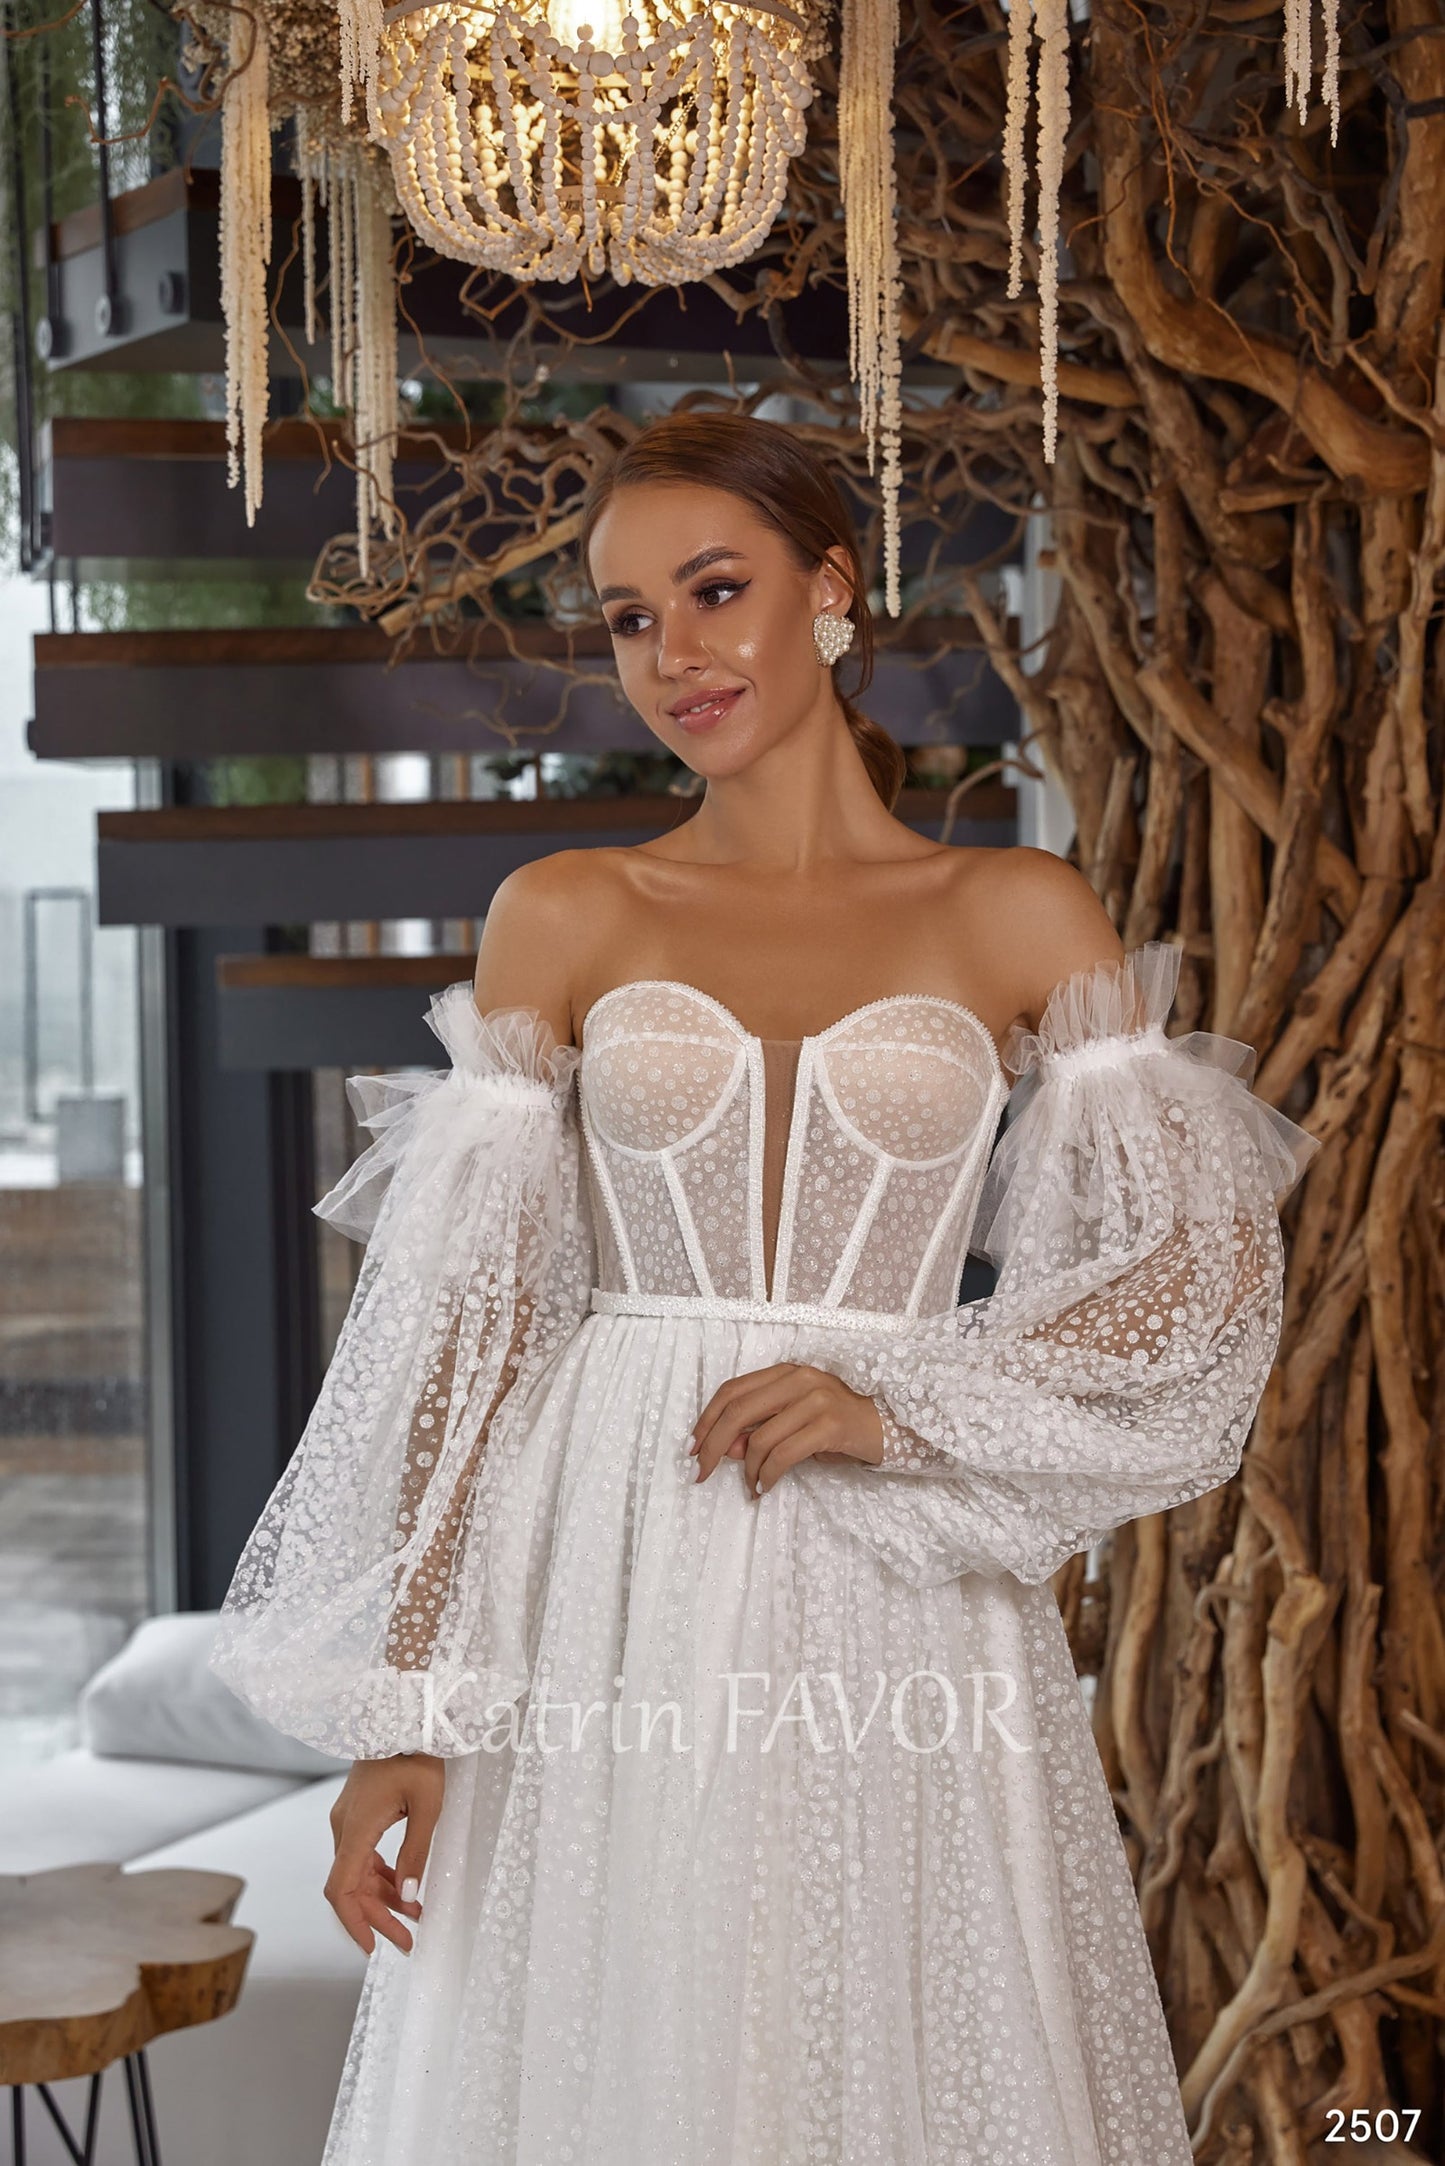 KatrinFAVORboutique-Fairytale wedding dress Puff sleeve wedding dress